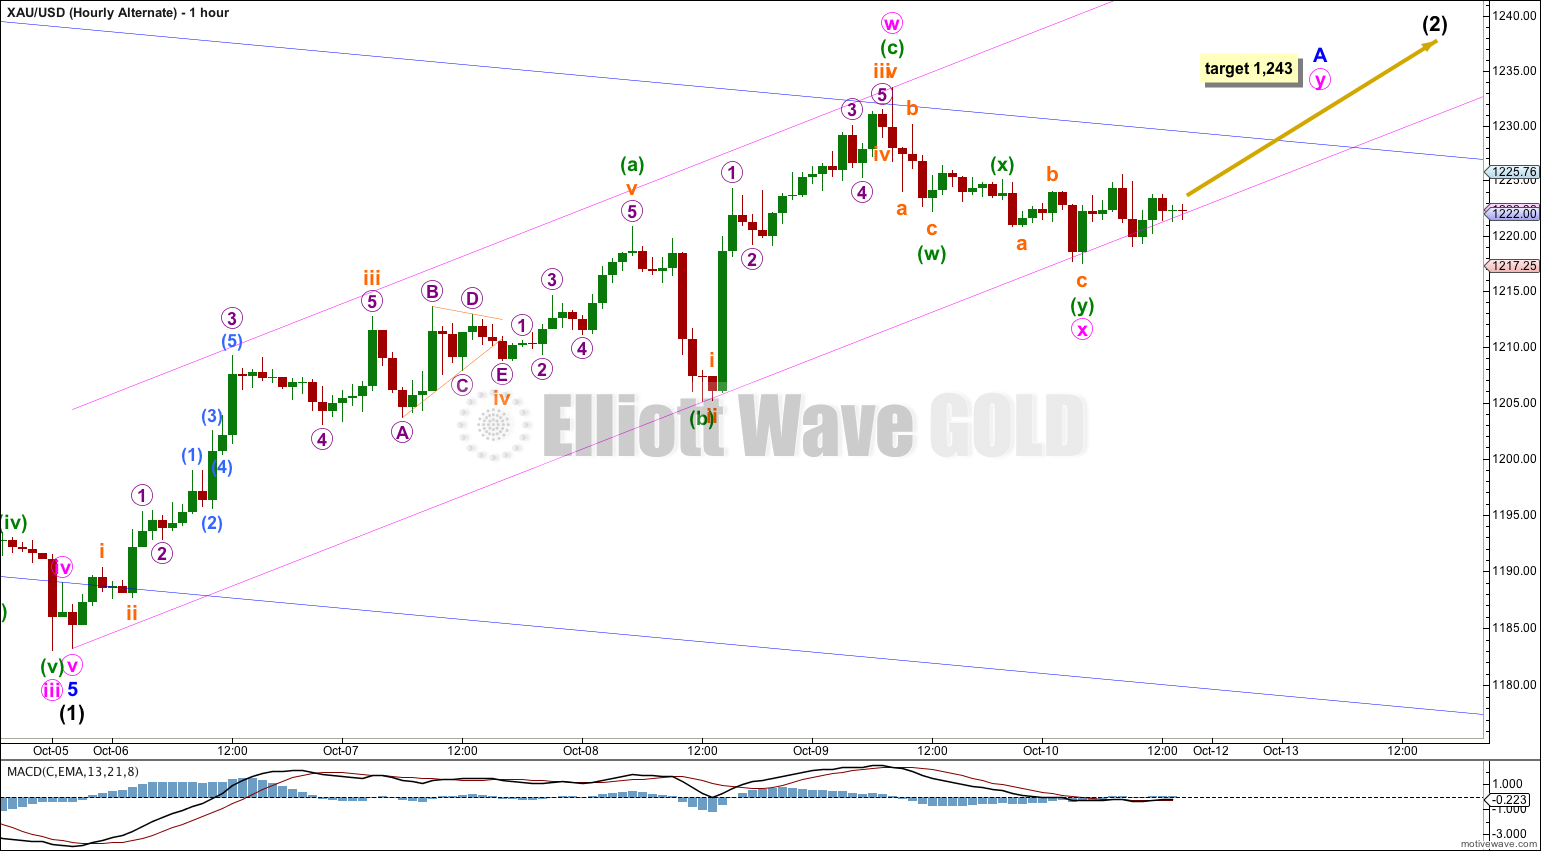 GOLD Elliott Wave Chart Hourly Alternate 2014